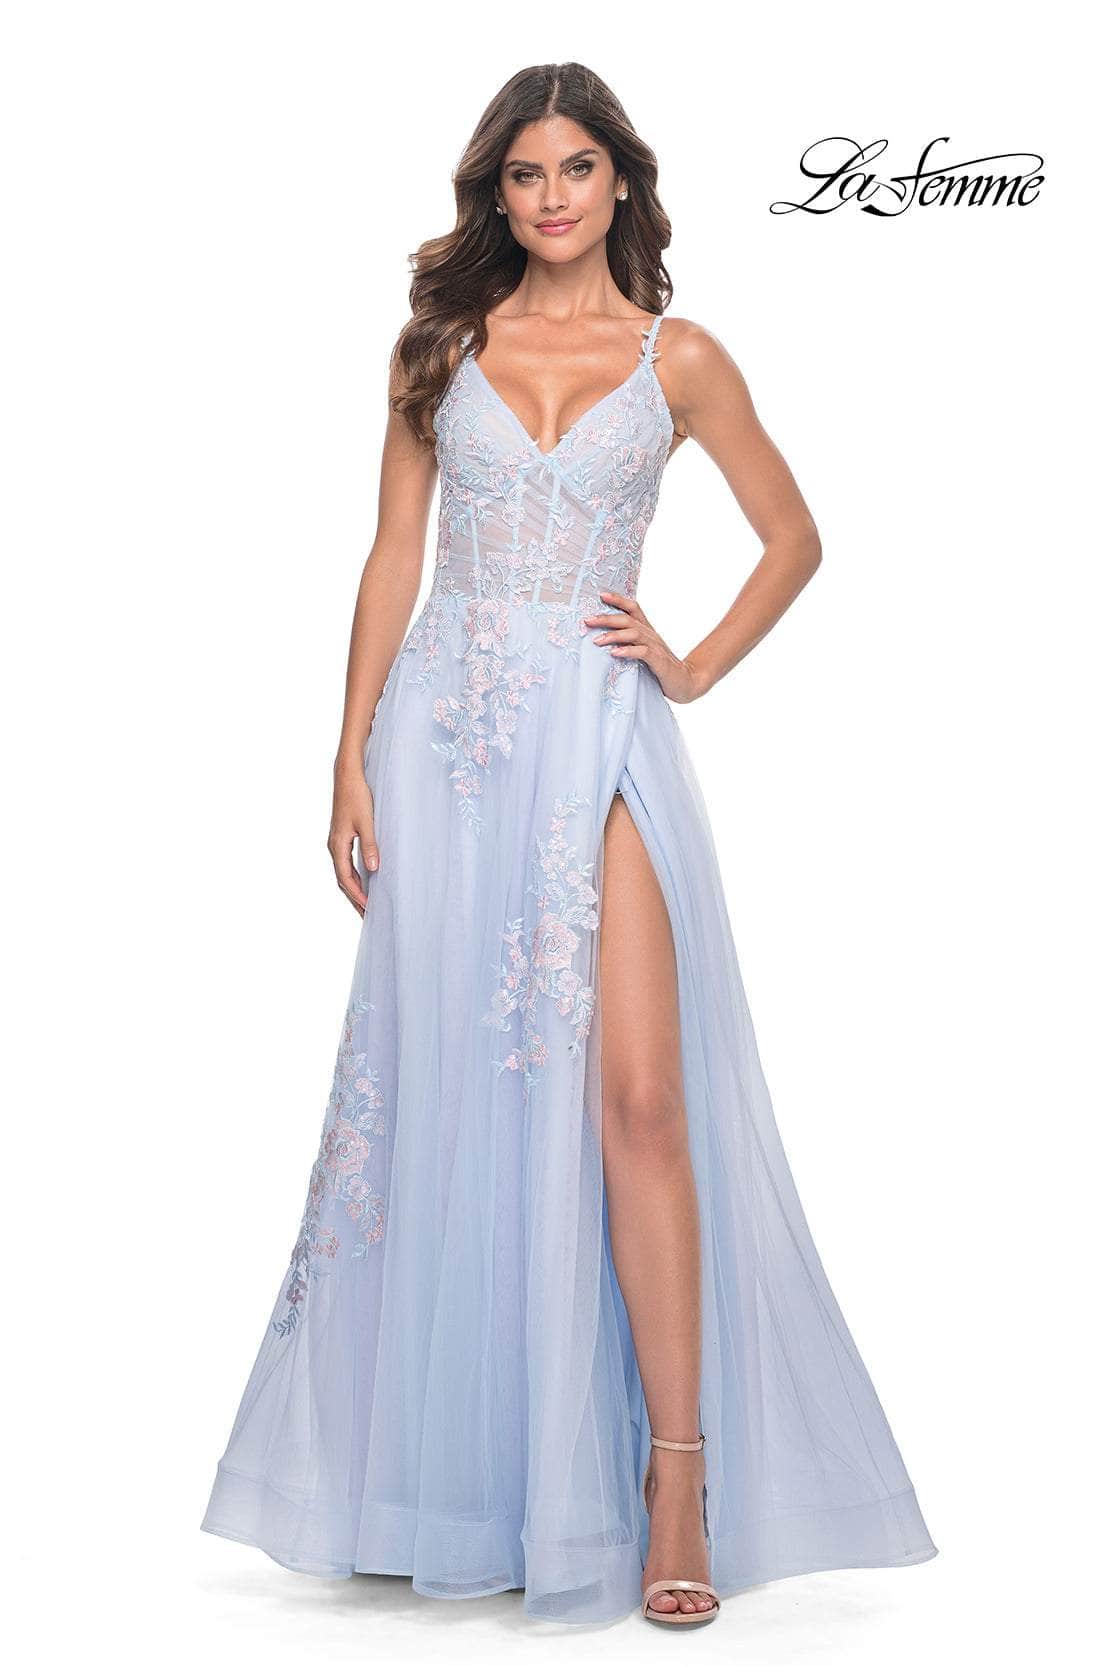 Image of La Femme 31939 - Tulle A-Line Prom Dress